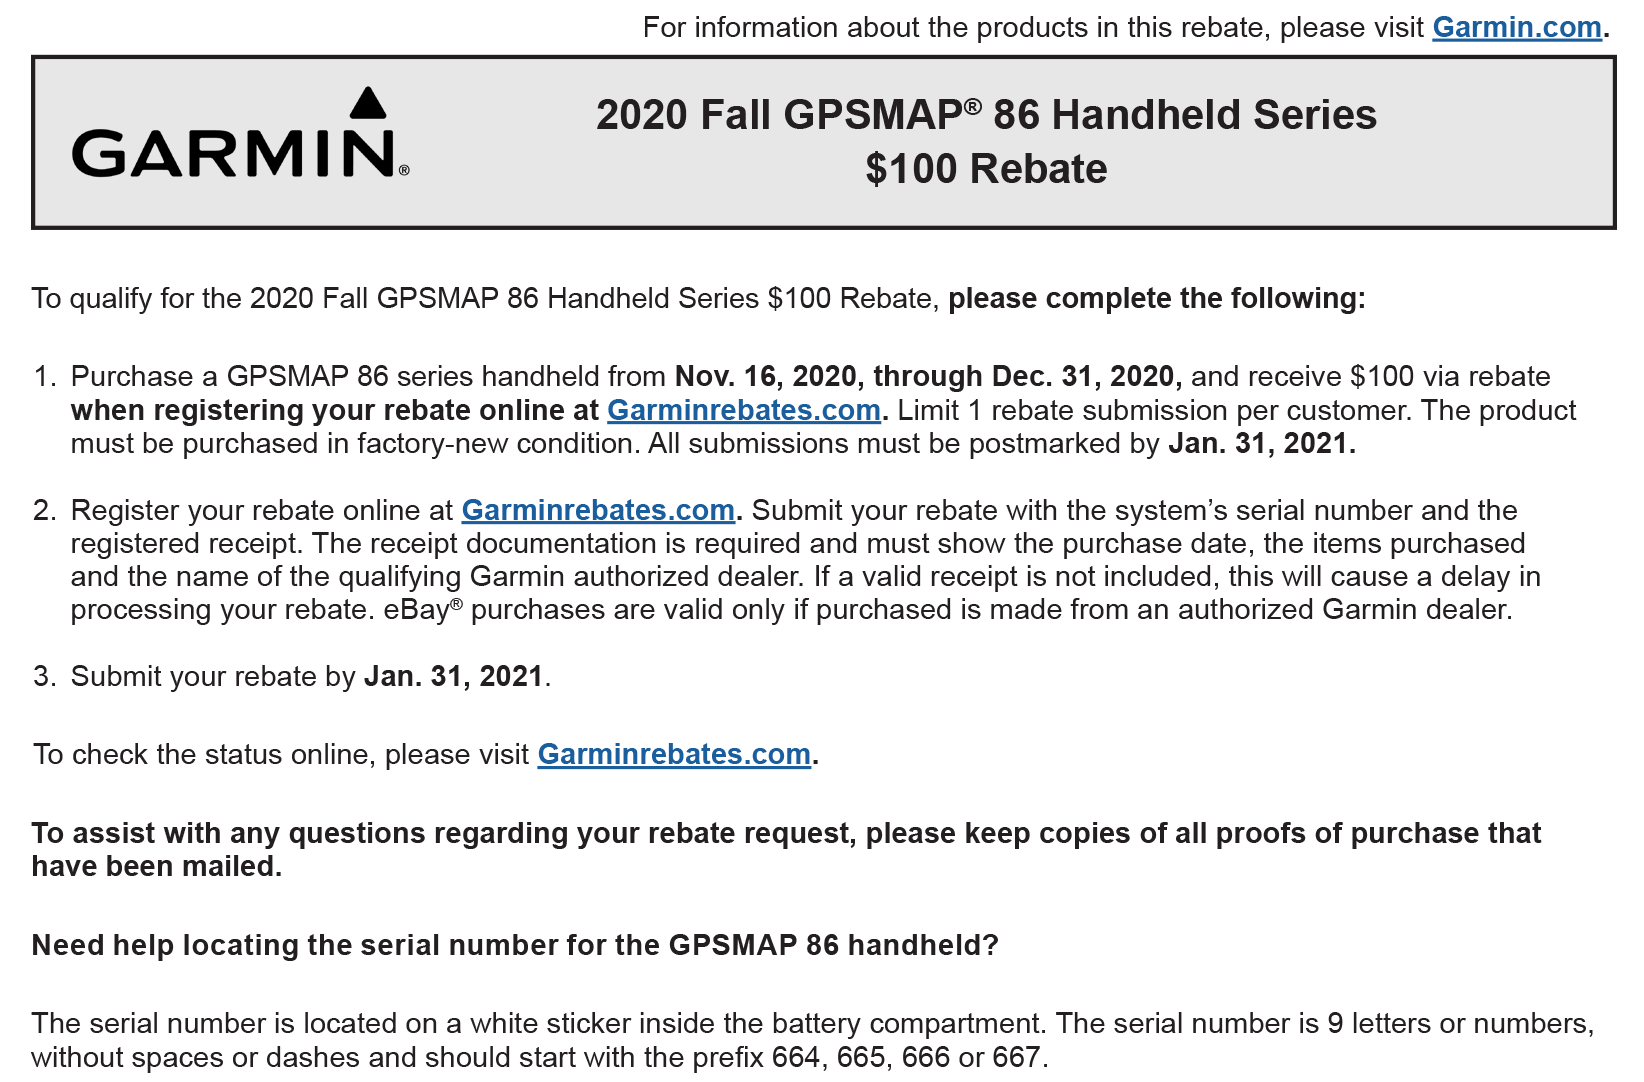 garmin-fall-gpsmap-86-handheld-series-rebate-2020-radioworld